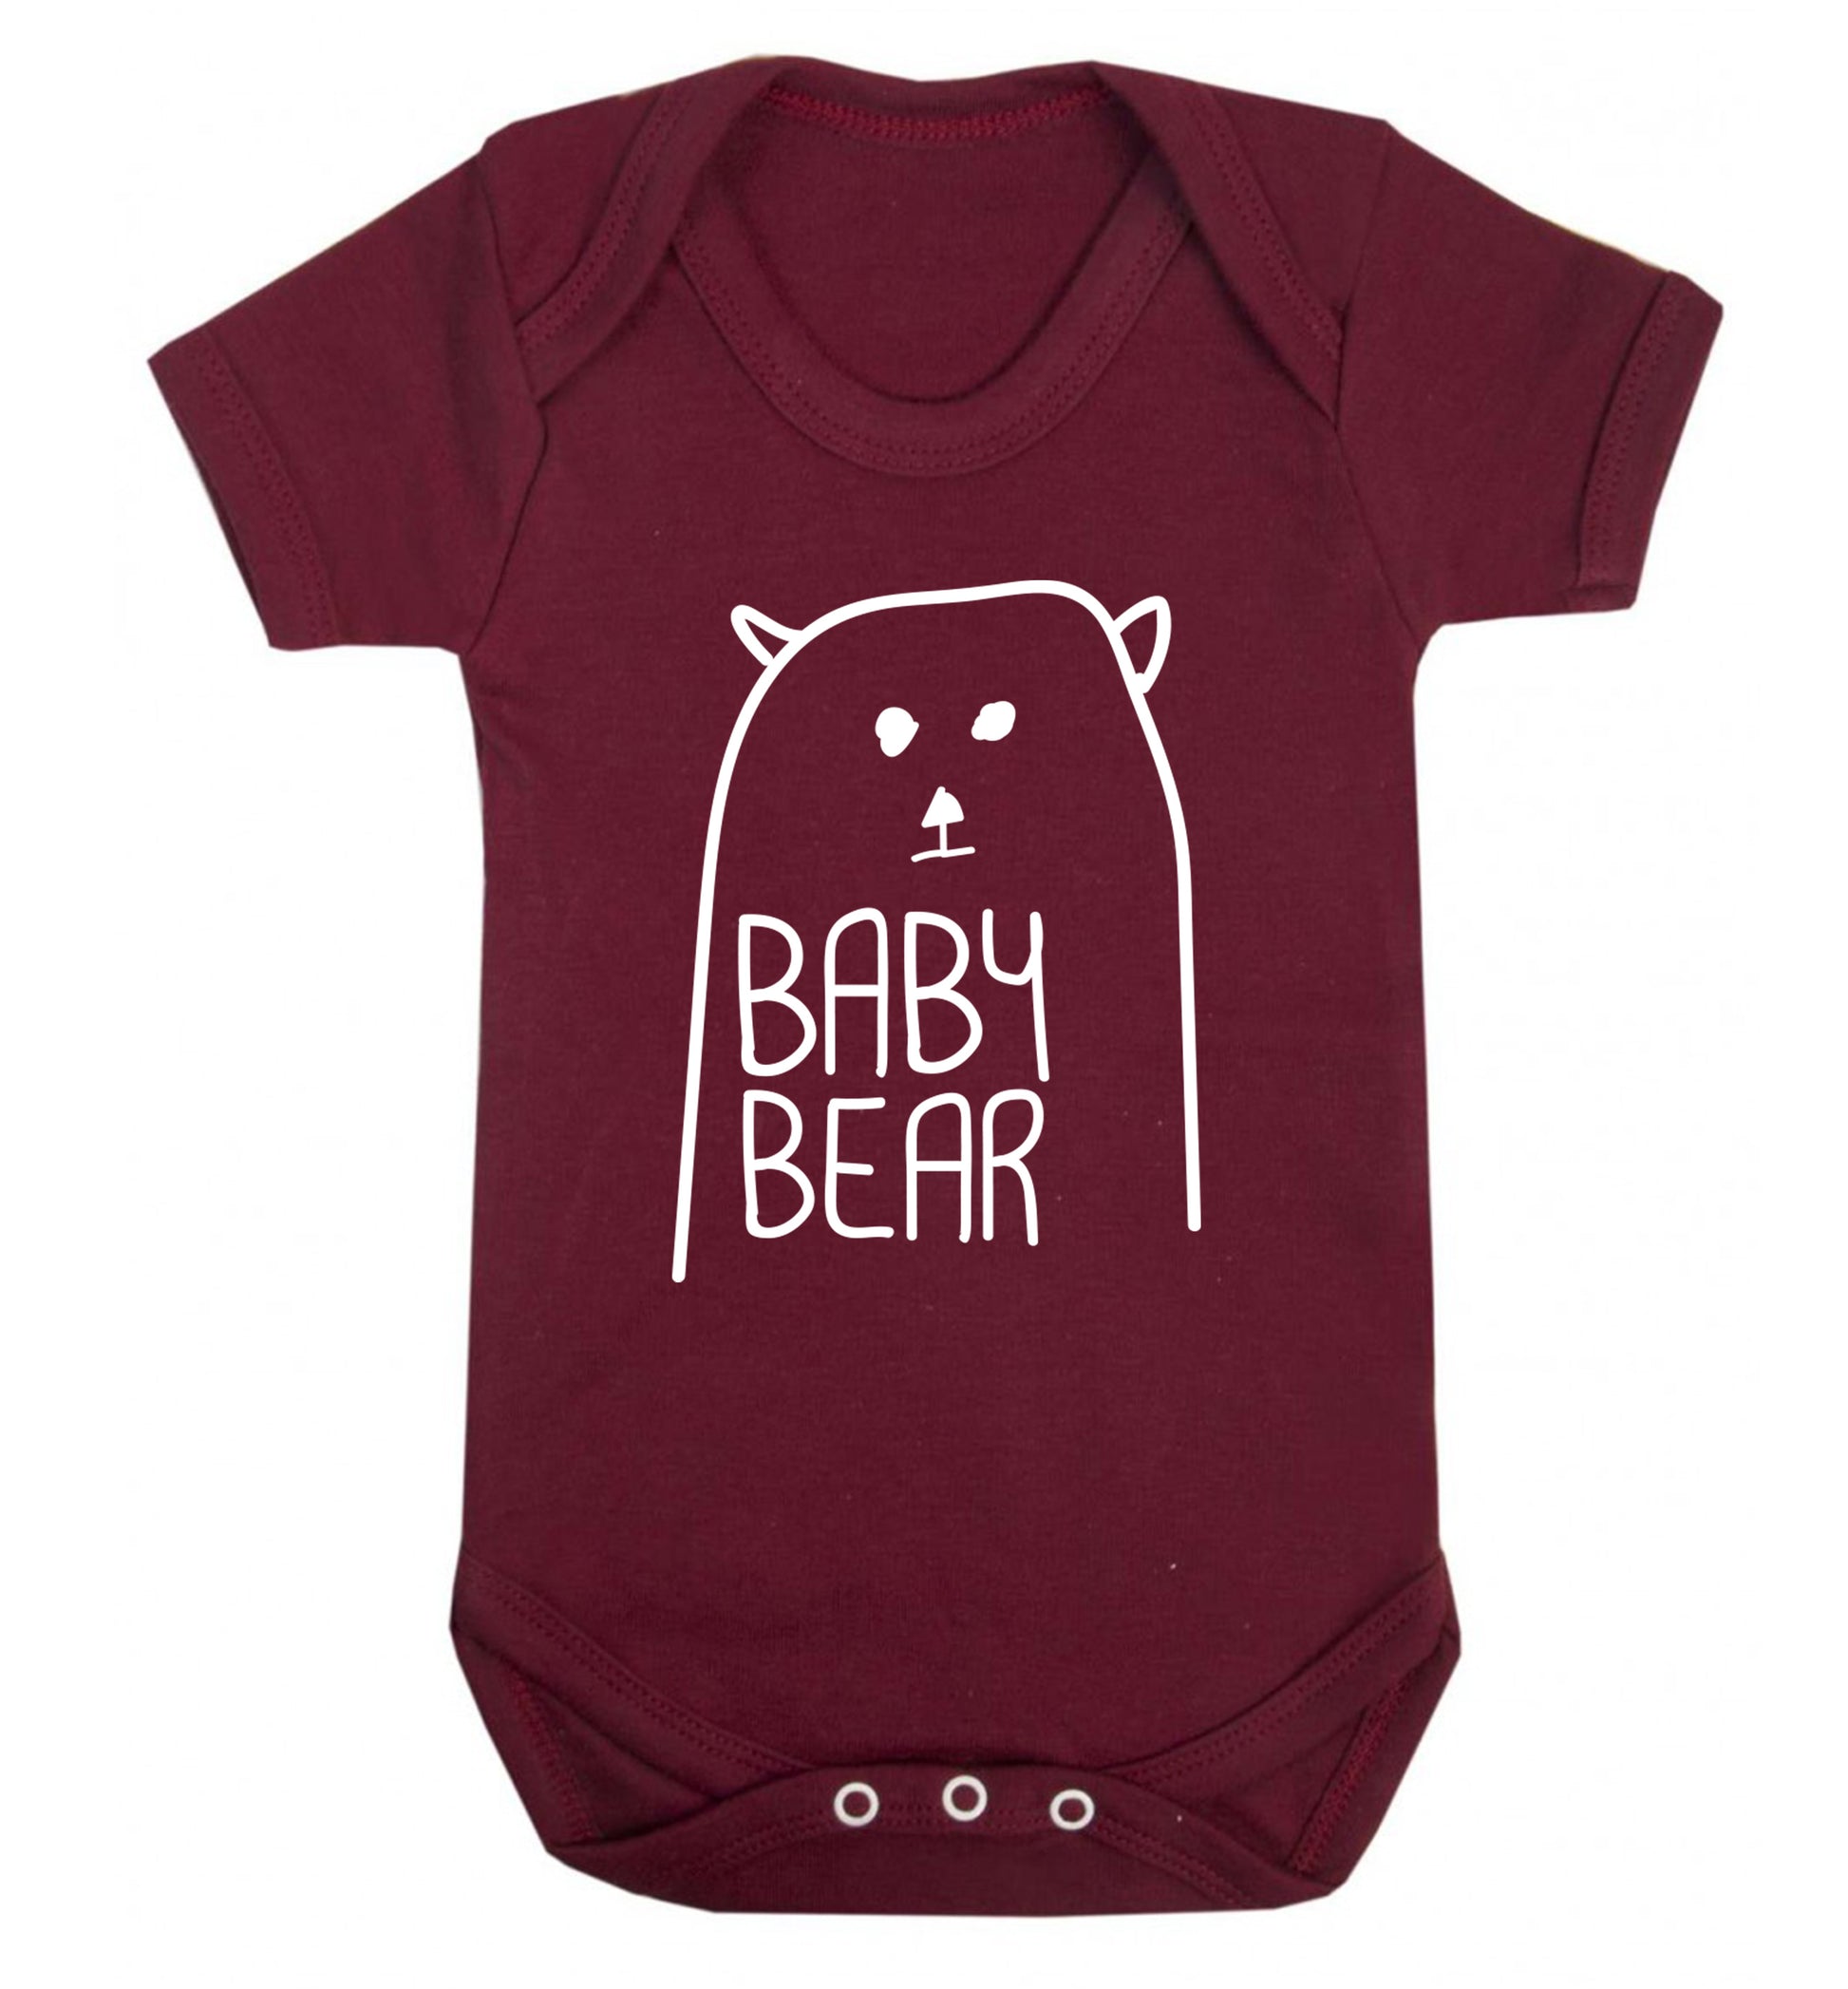 Baby bear Baby Vest maroon 18-24 months